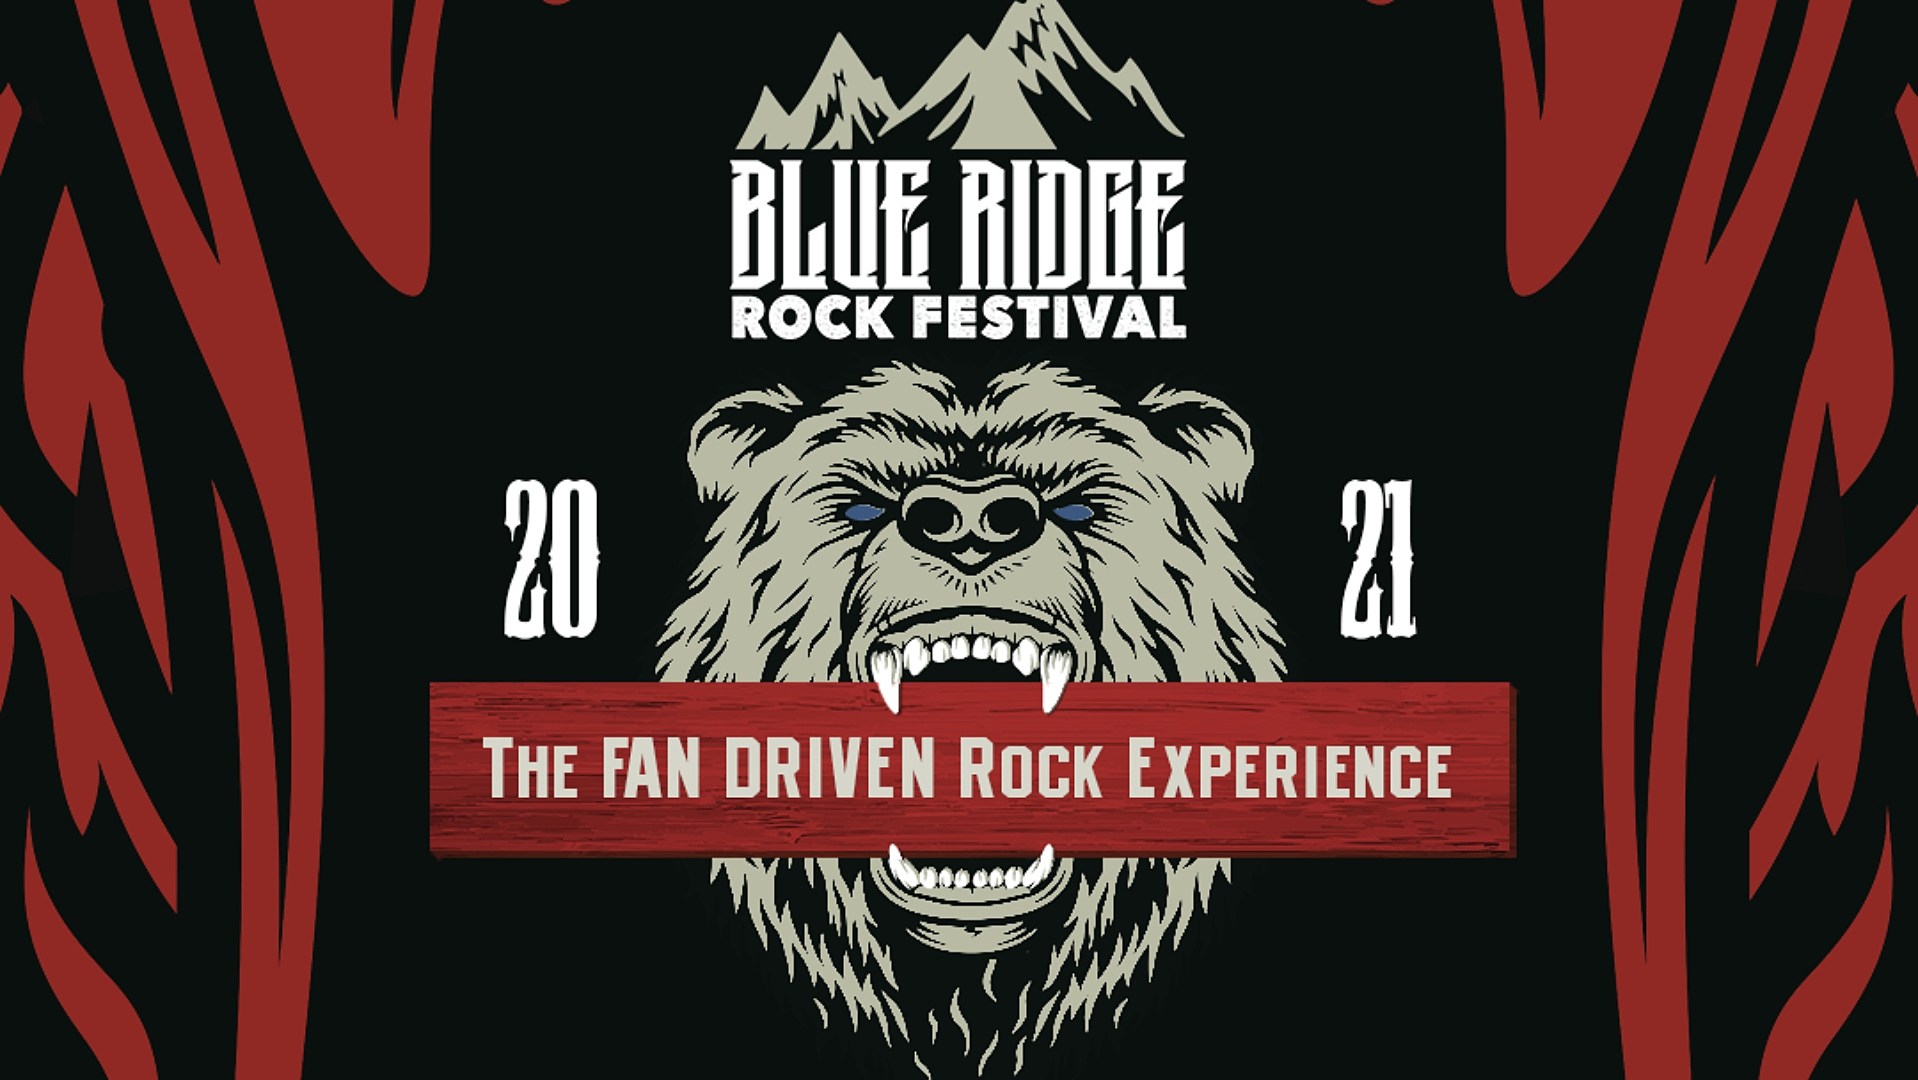 What Happened At Blue Ridge Rock Festival?